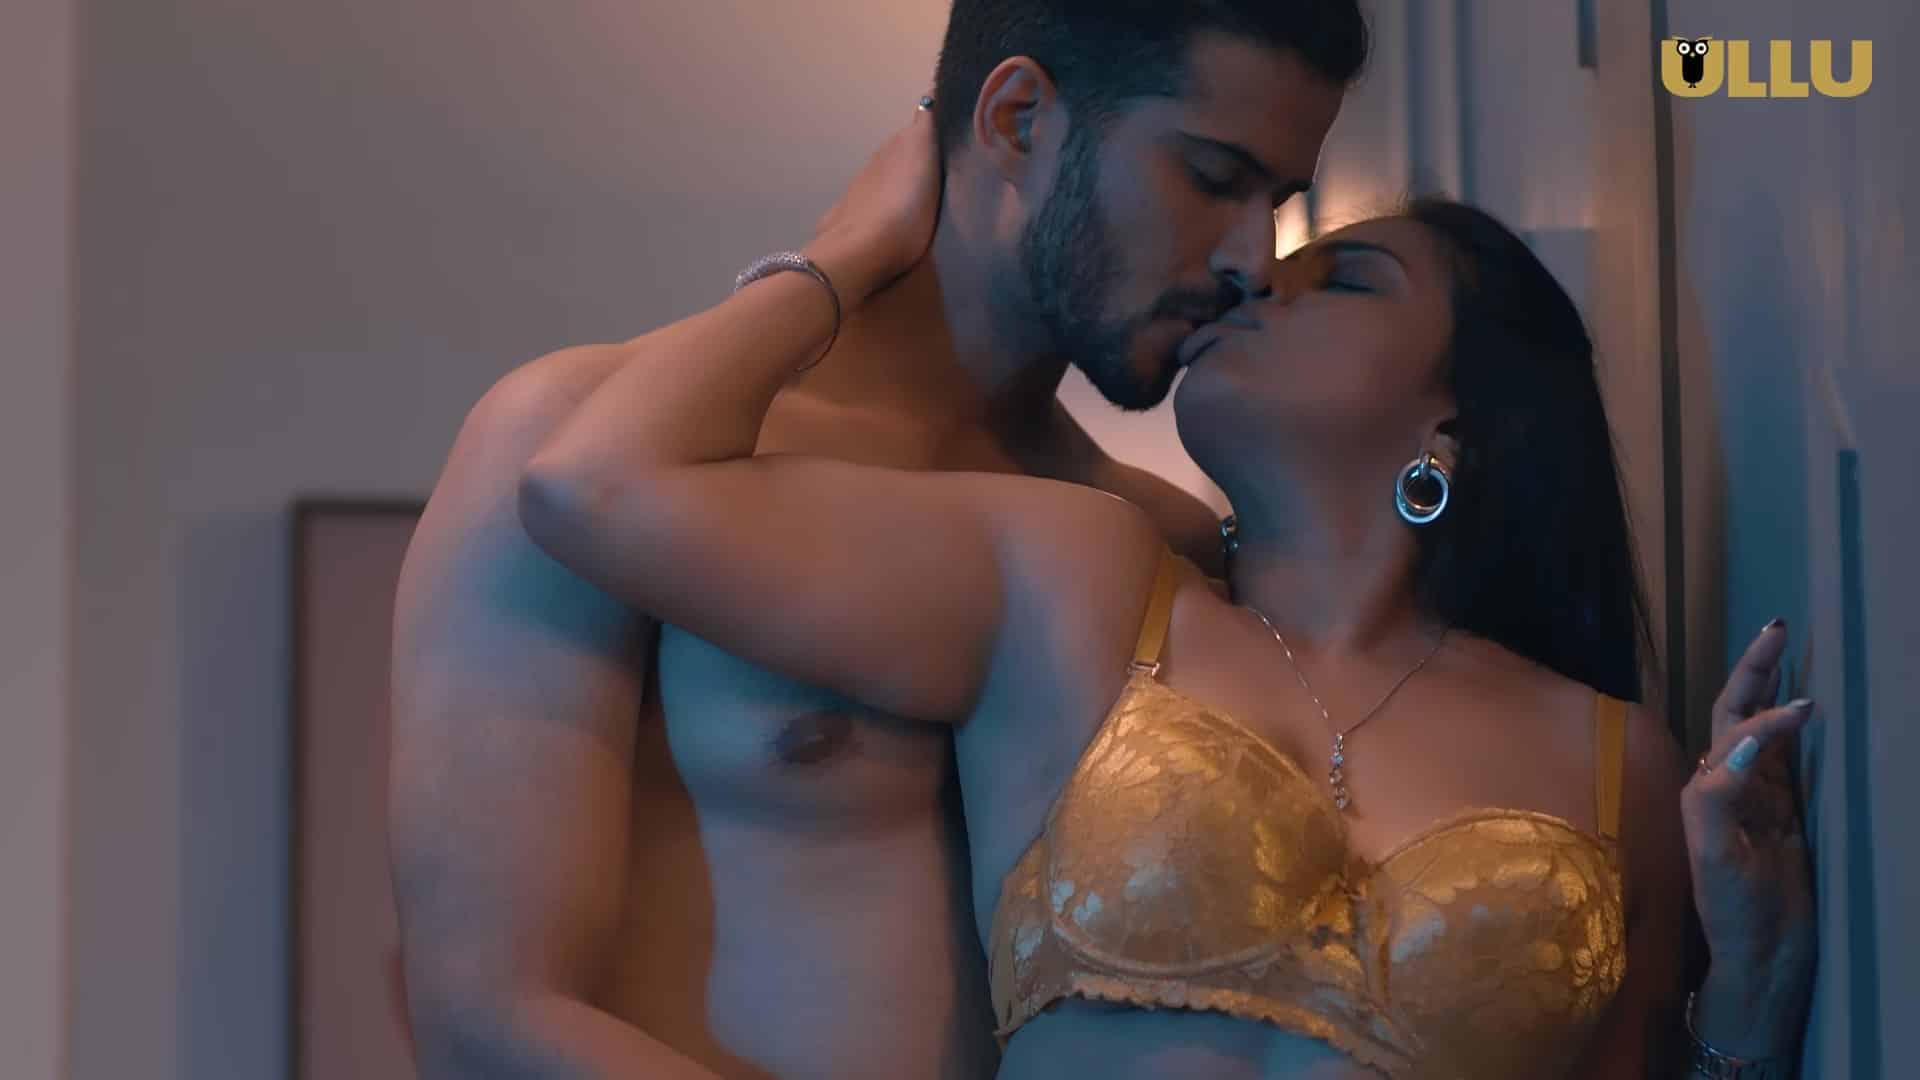 18 Sex Video Hindi - ullu sex video - Page 3 of 18 - XNXX TV